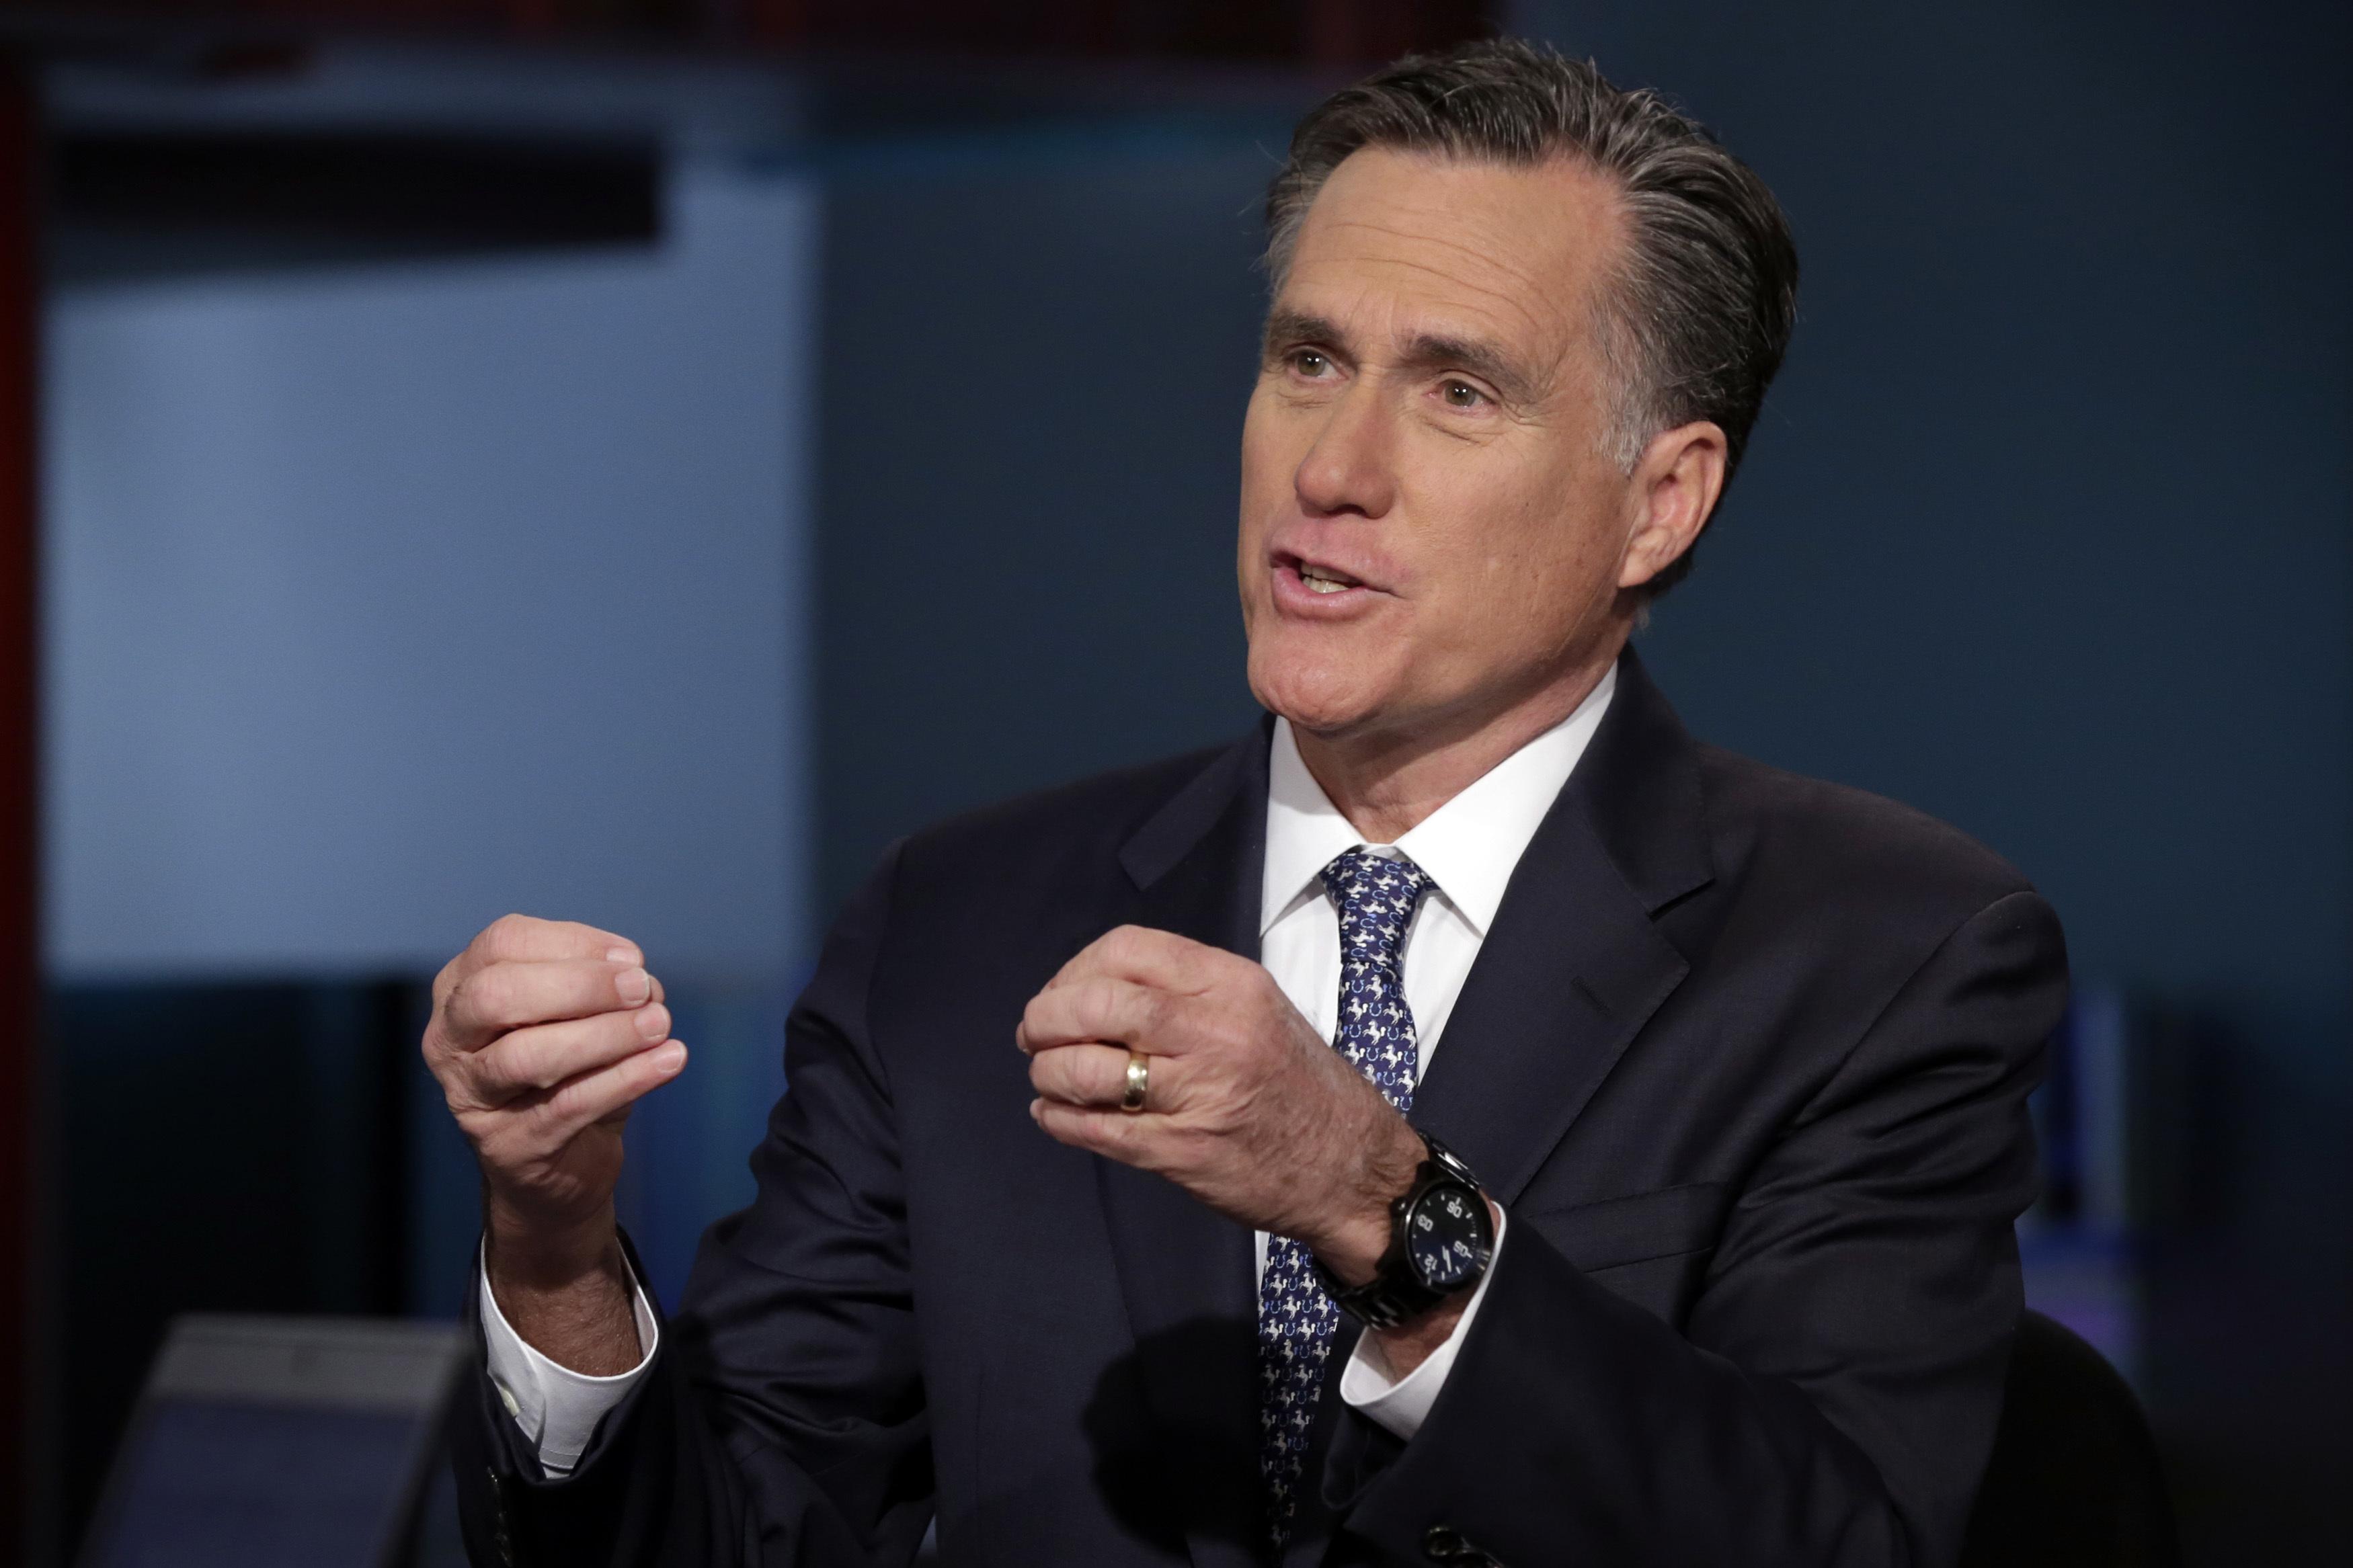 Mitt Romney knocks Donald Trump in robocalls paid for by John Kasich - Washington Times